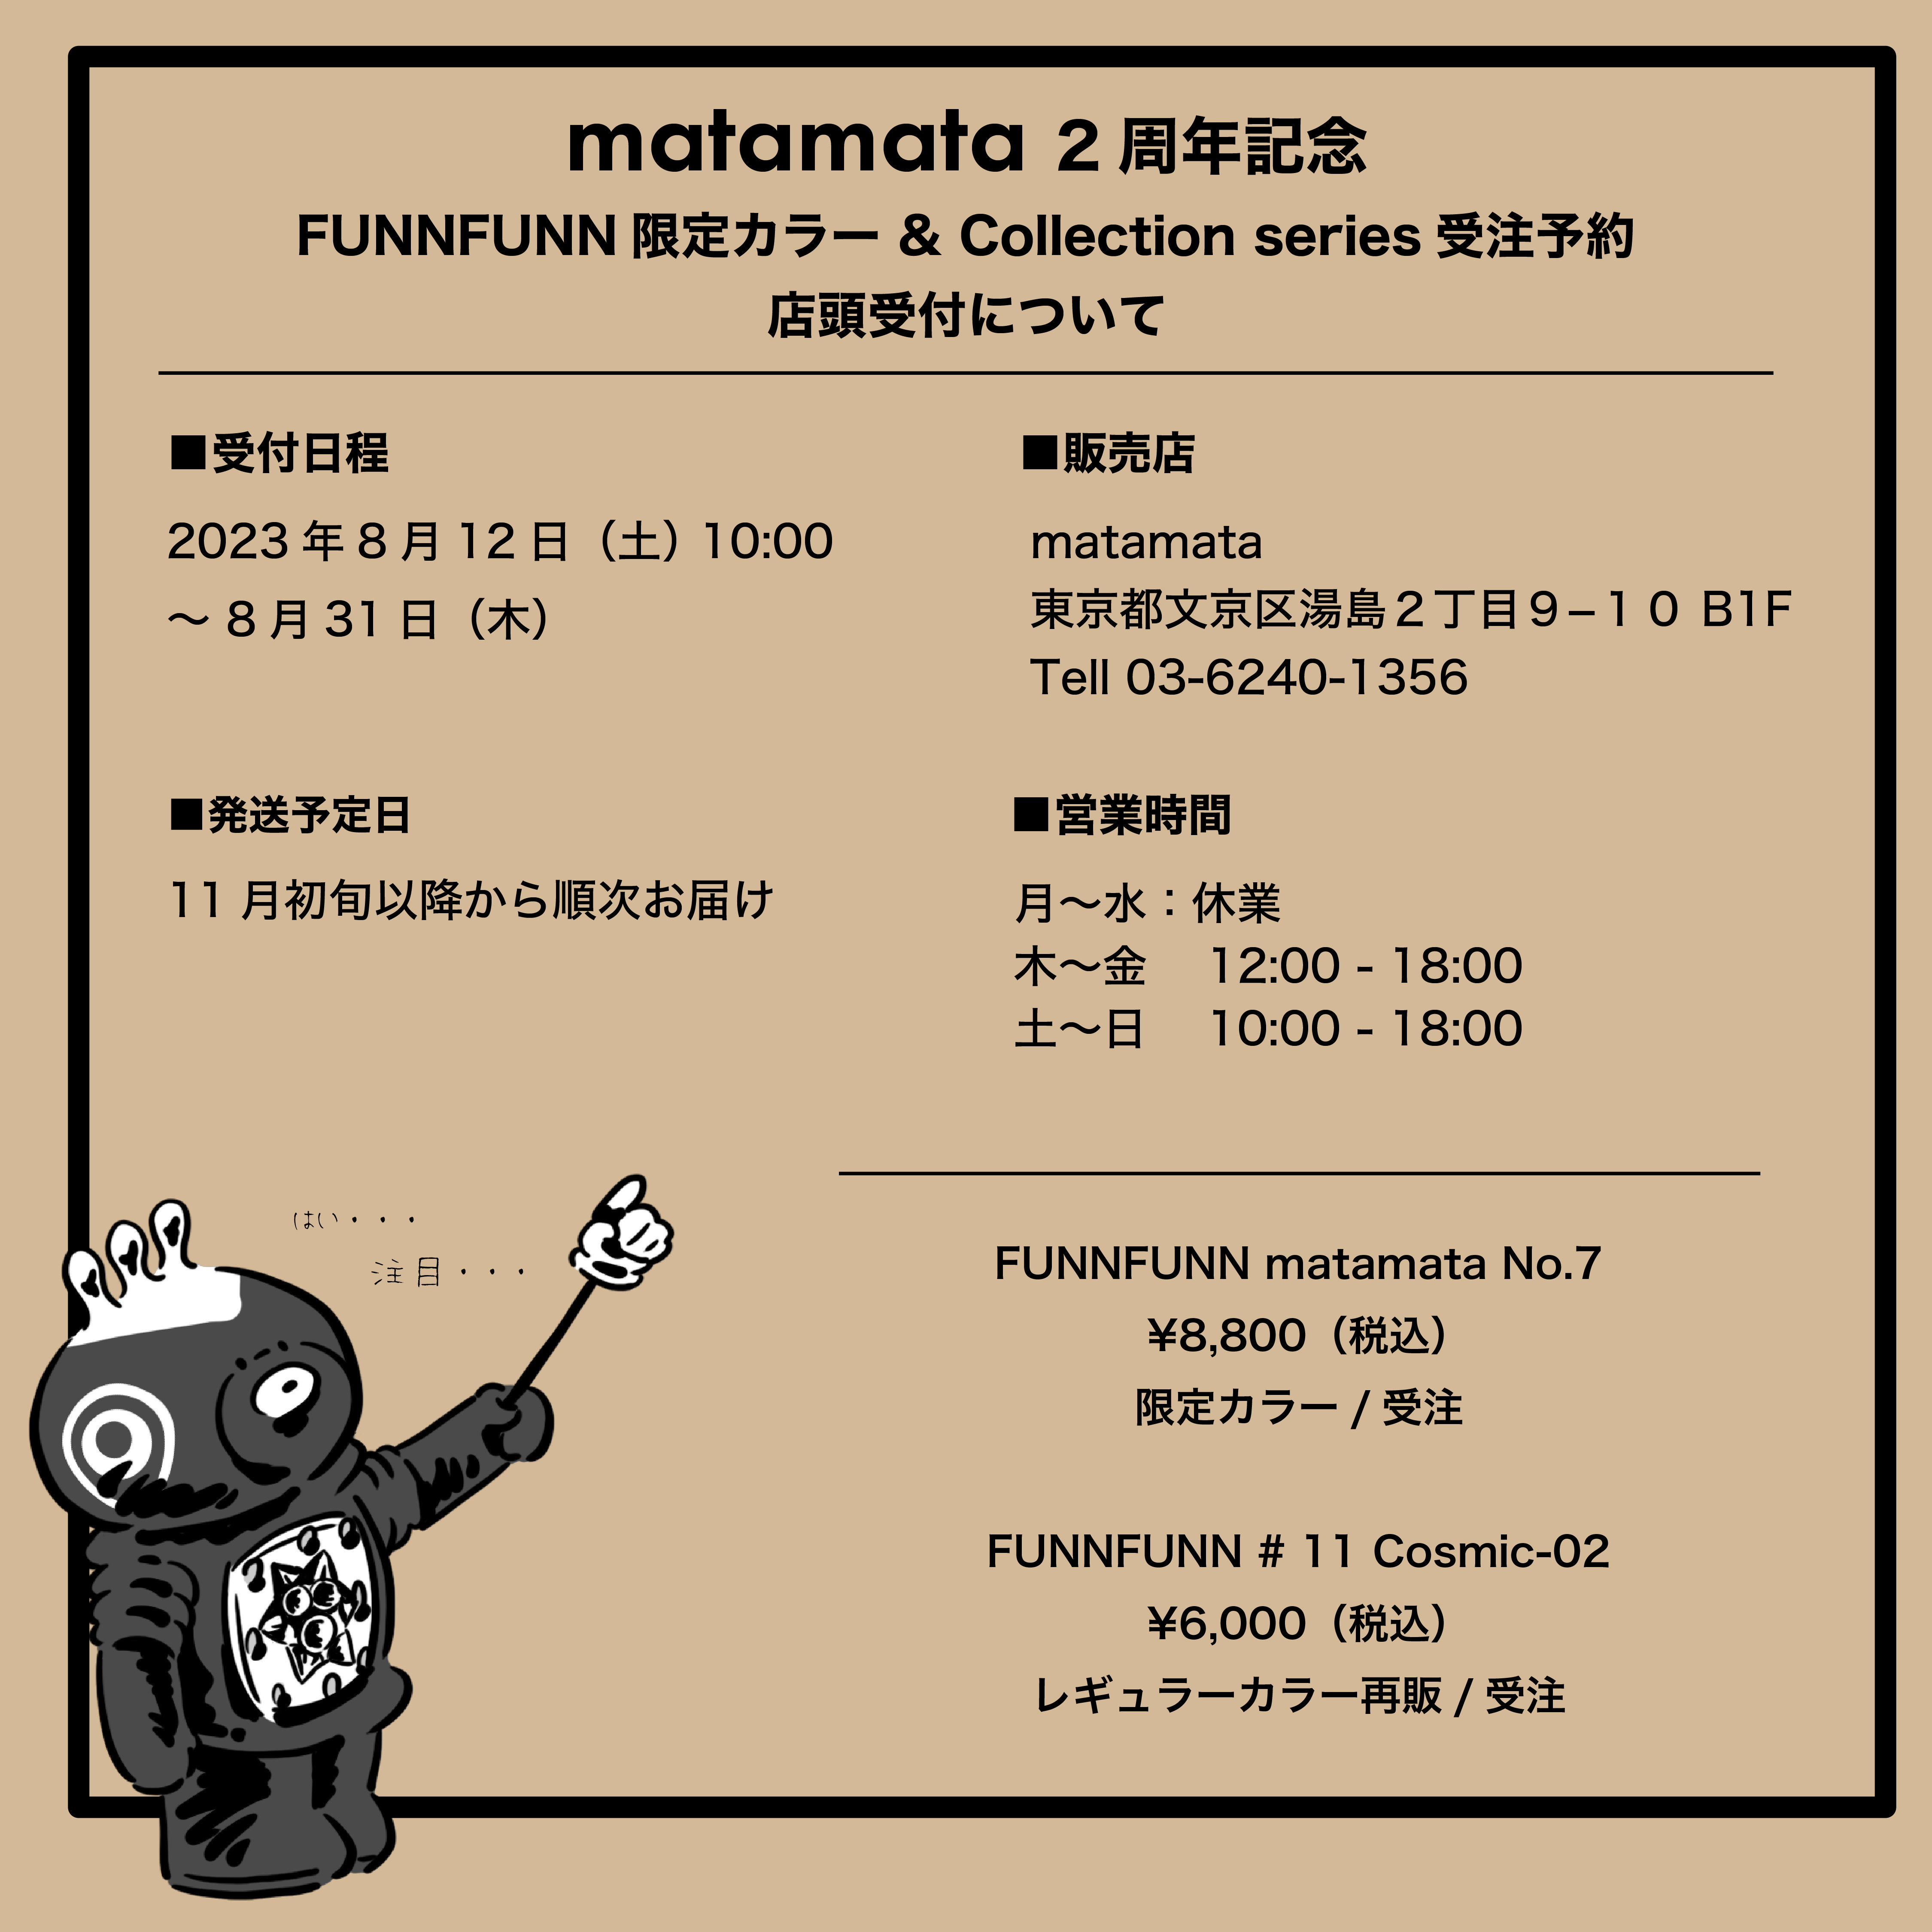 matamata 2周年記念限定販売/定期受注制作のお知らせ